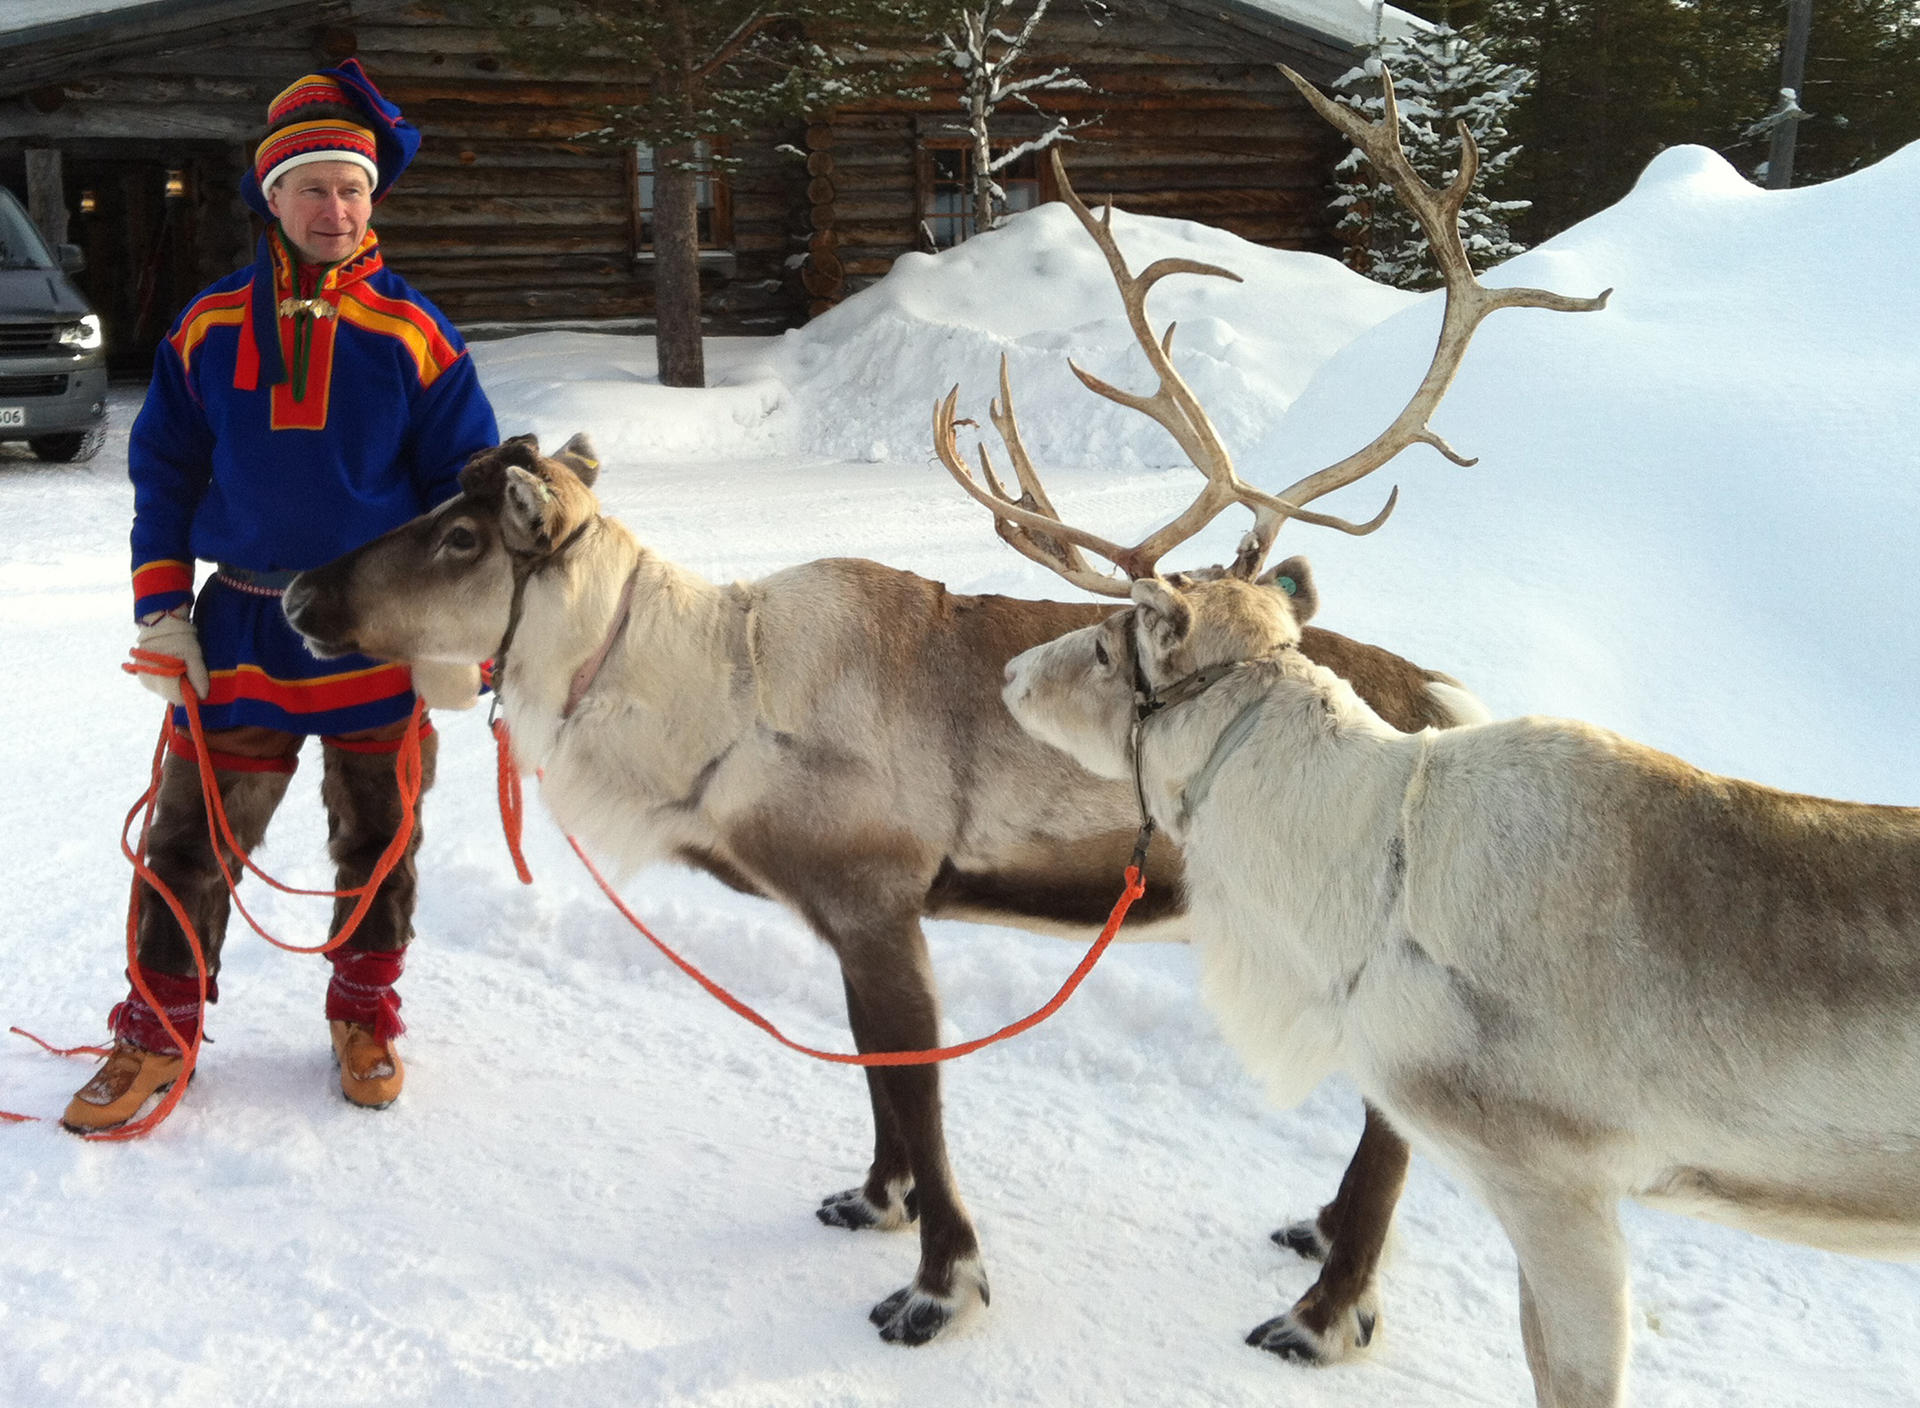 Sami herdsman provided the reindeer that showed the seasonal changes. Photo: AP